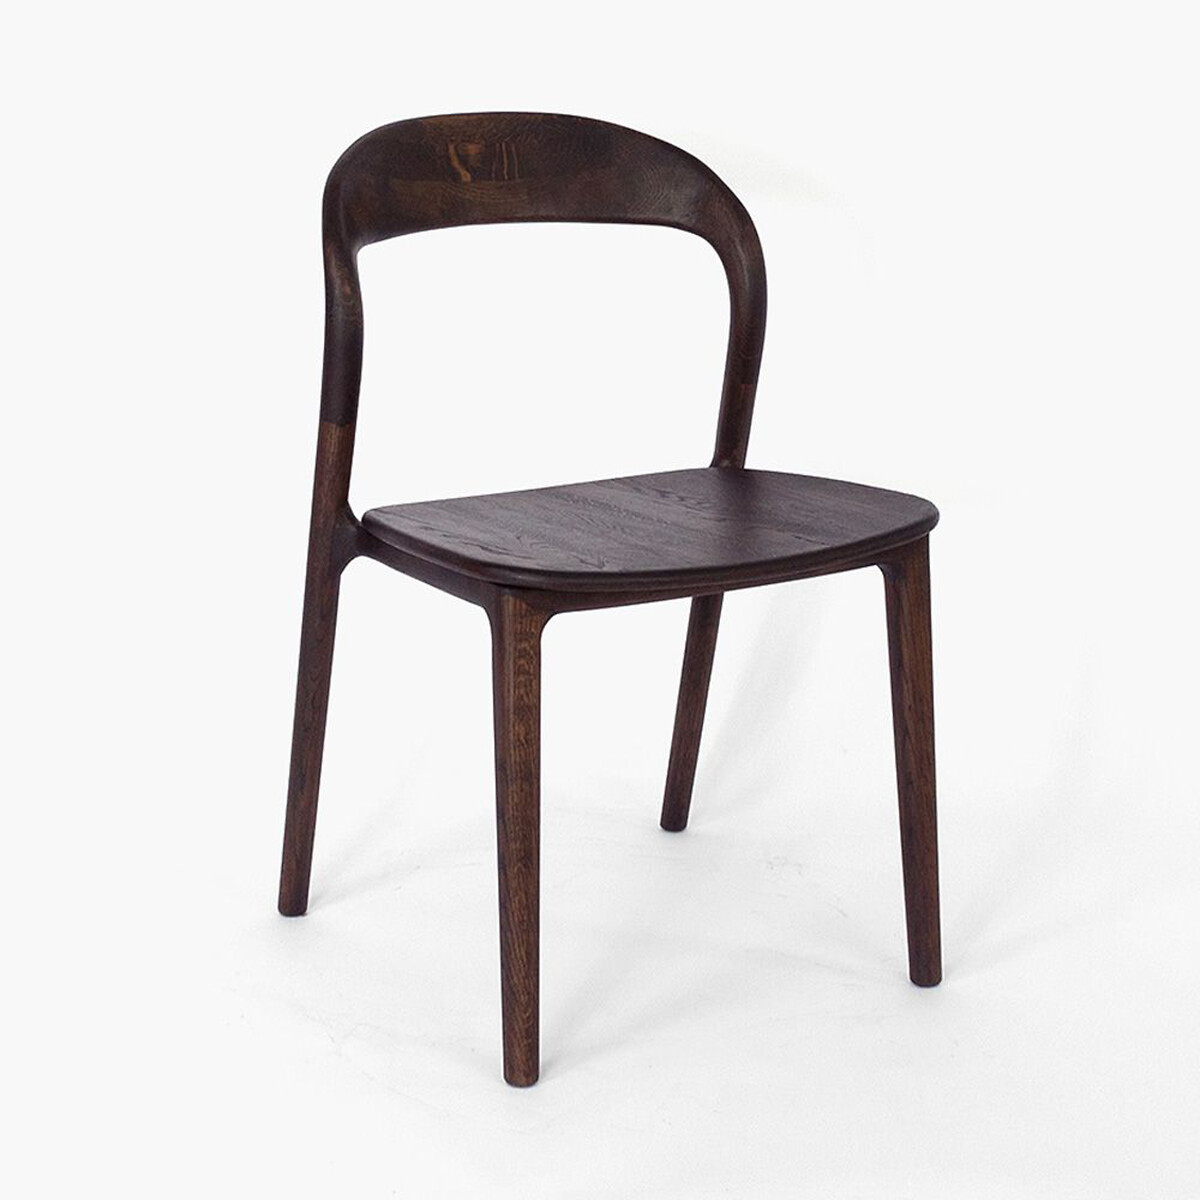 Стул Лугано единый размер каштановый стул полубарный лугано единый размер бежевый